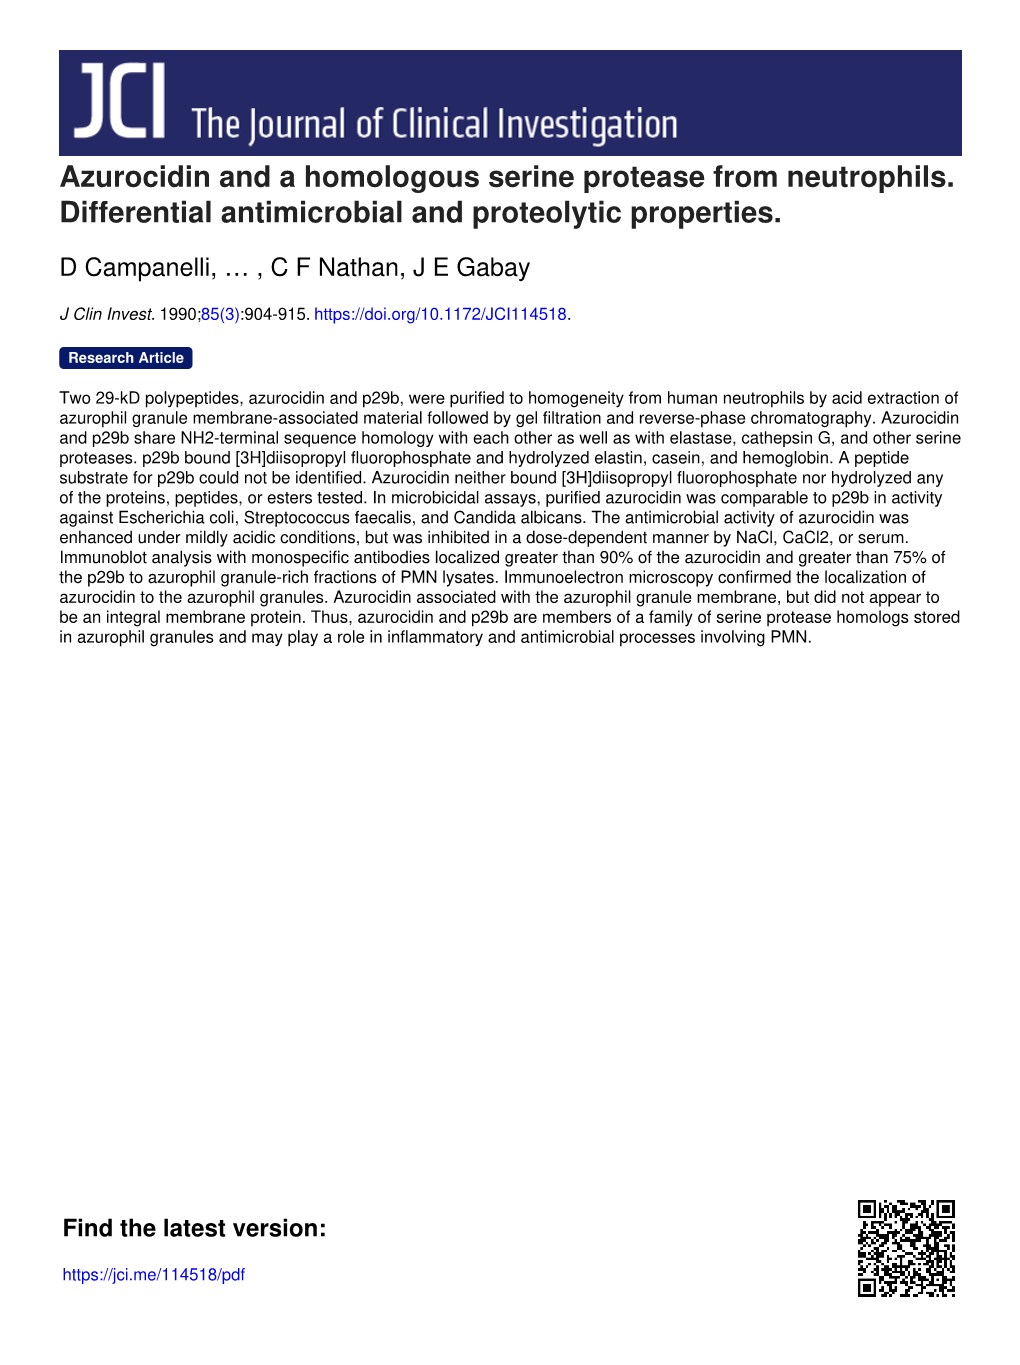 Azurocidin and a Homologous Serine Protease from Neutrophils